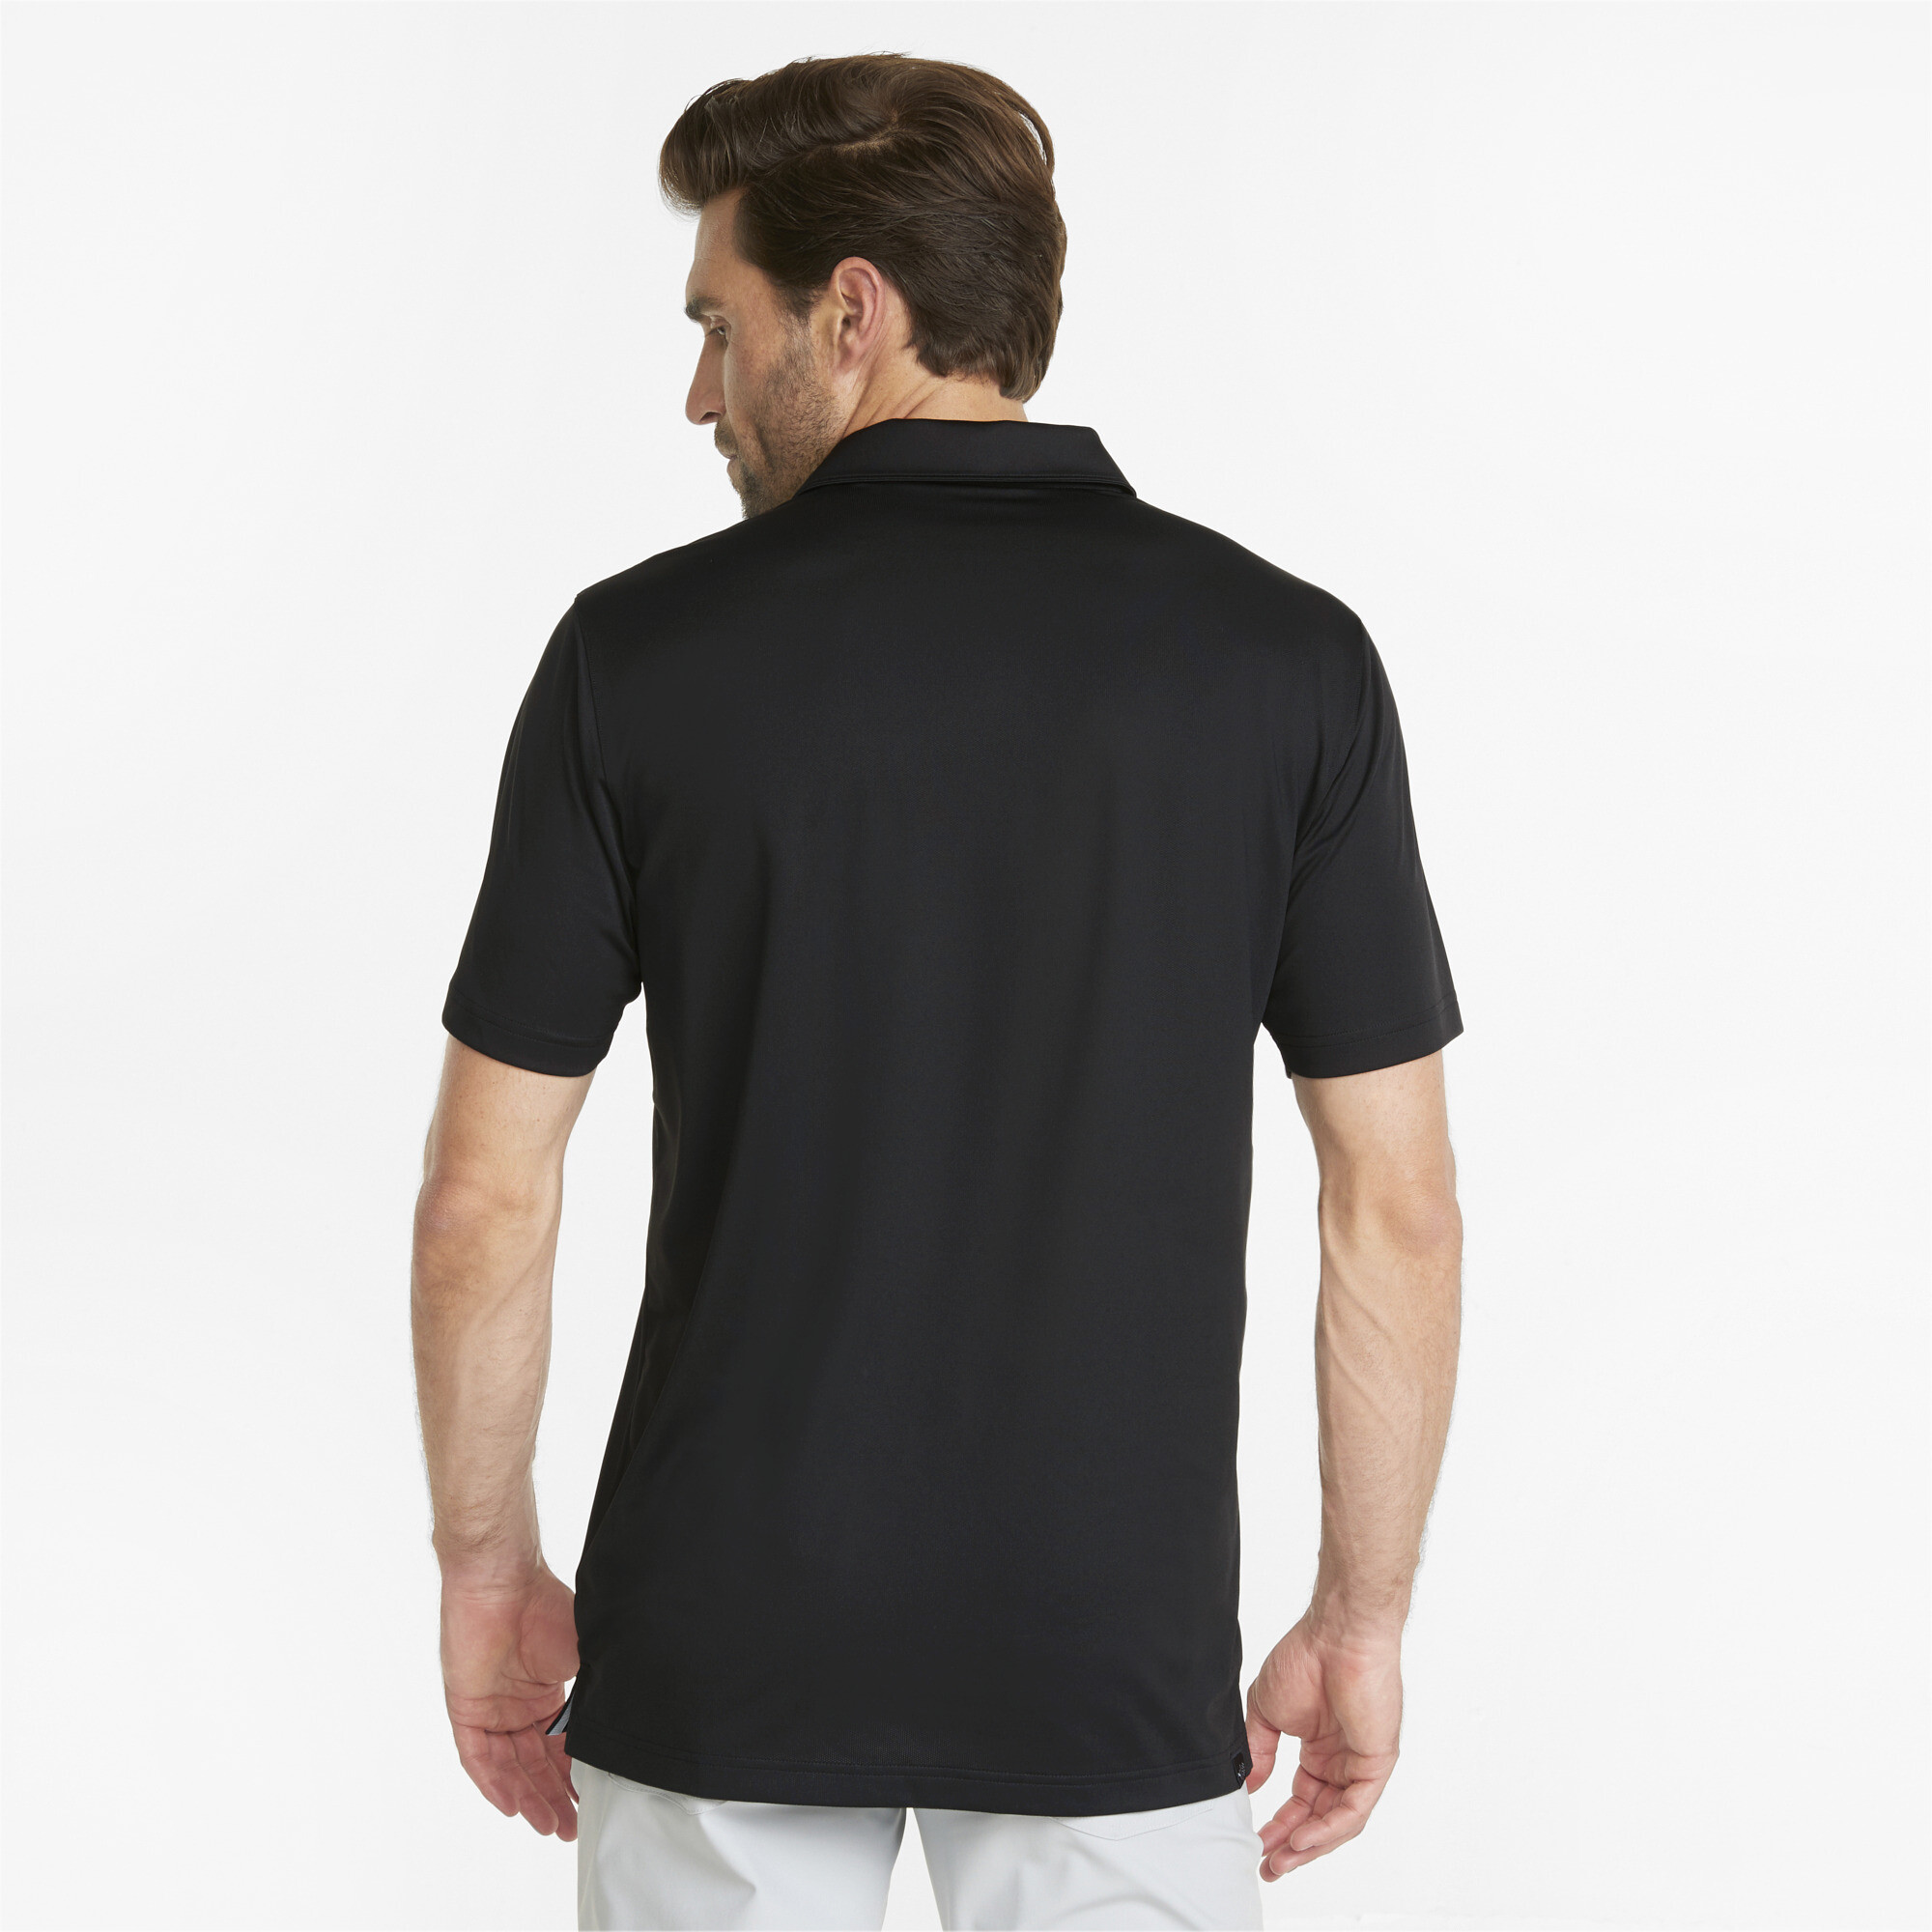 Men's Puma Gamer's Golf Polo Shirt T-Shirt, Black T-Shirt, Size 4XL T-Shirt, Clothing